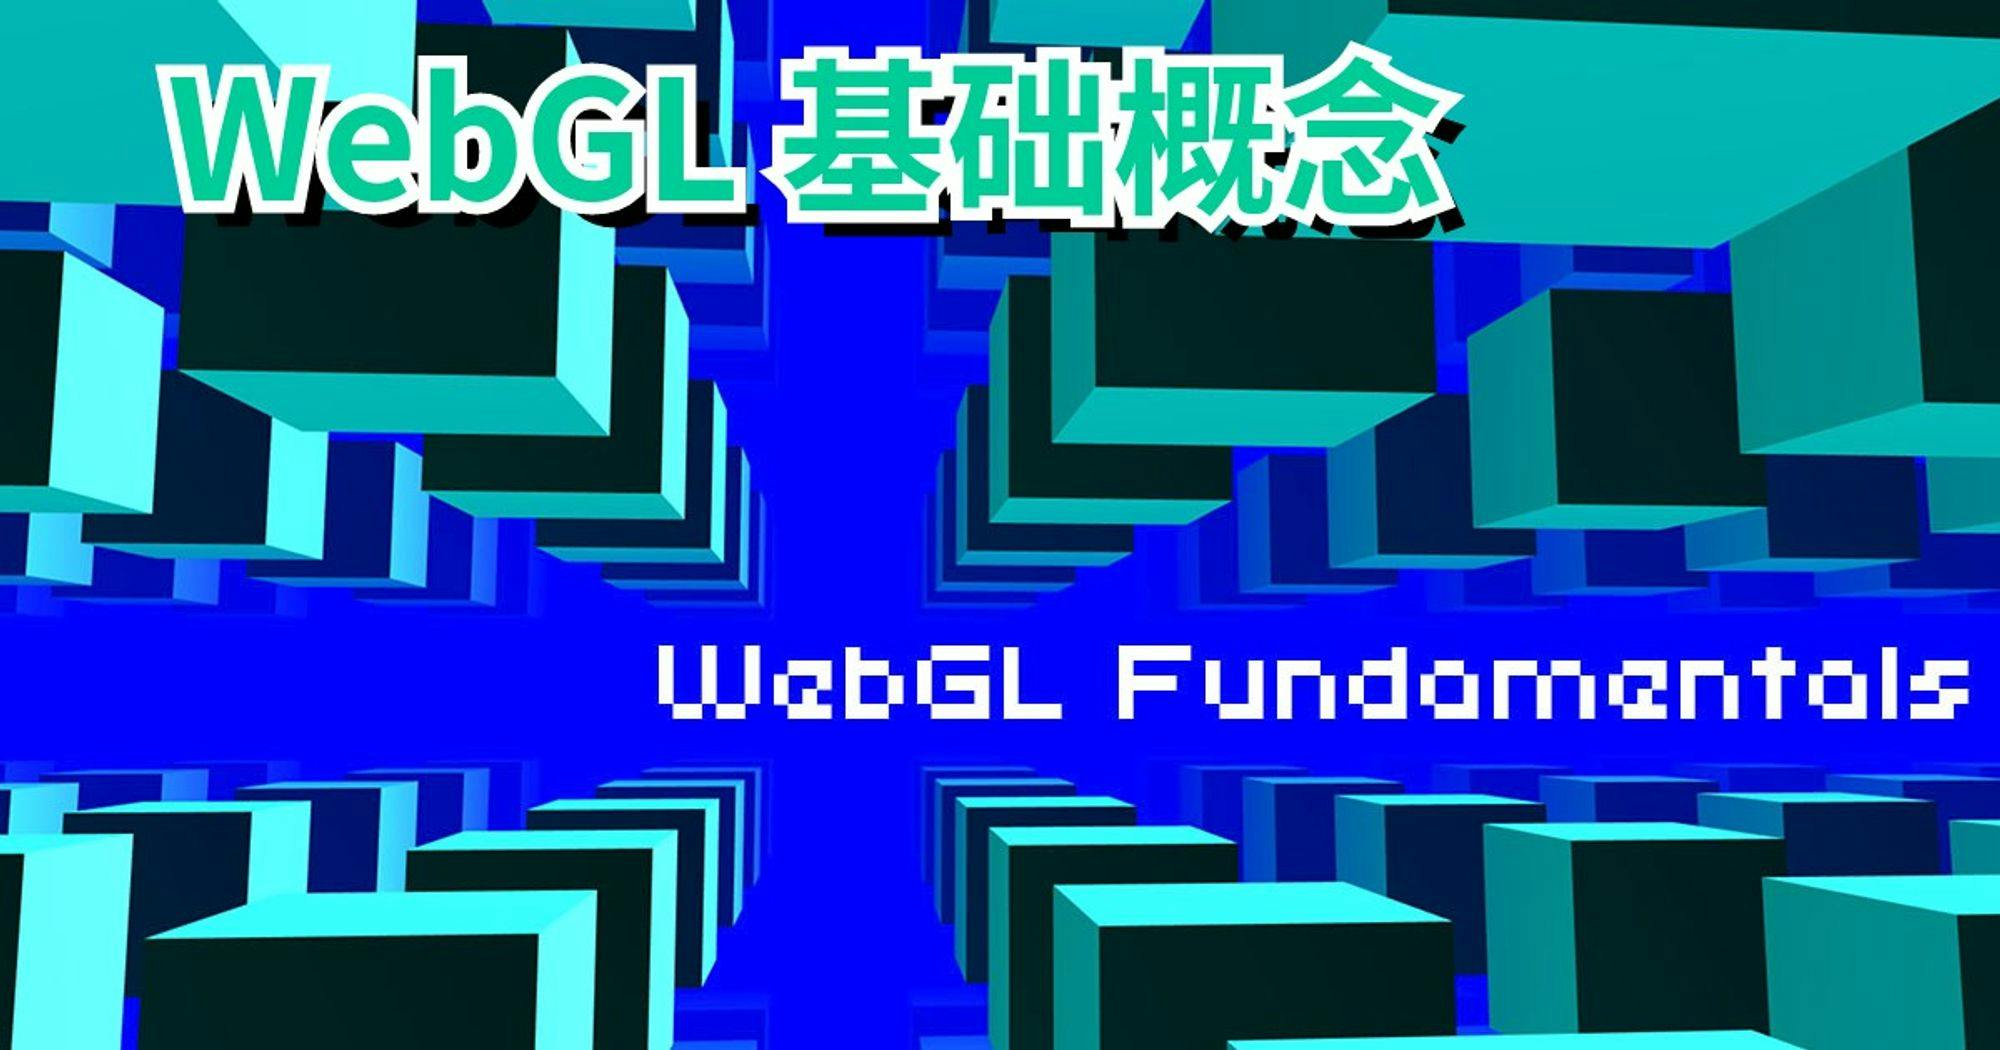 WebGL 基础概念